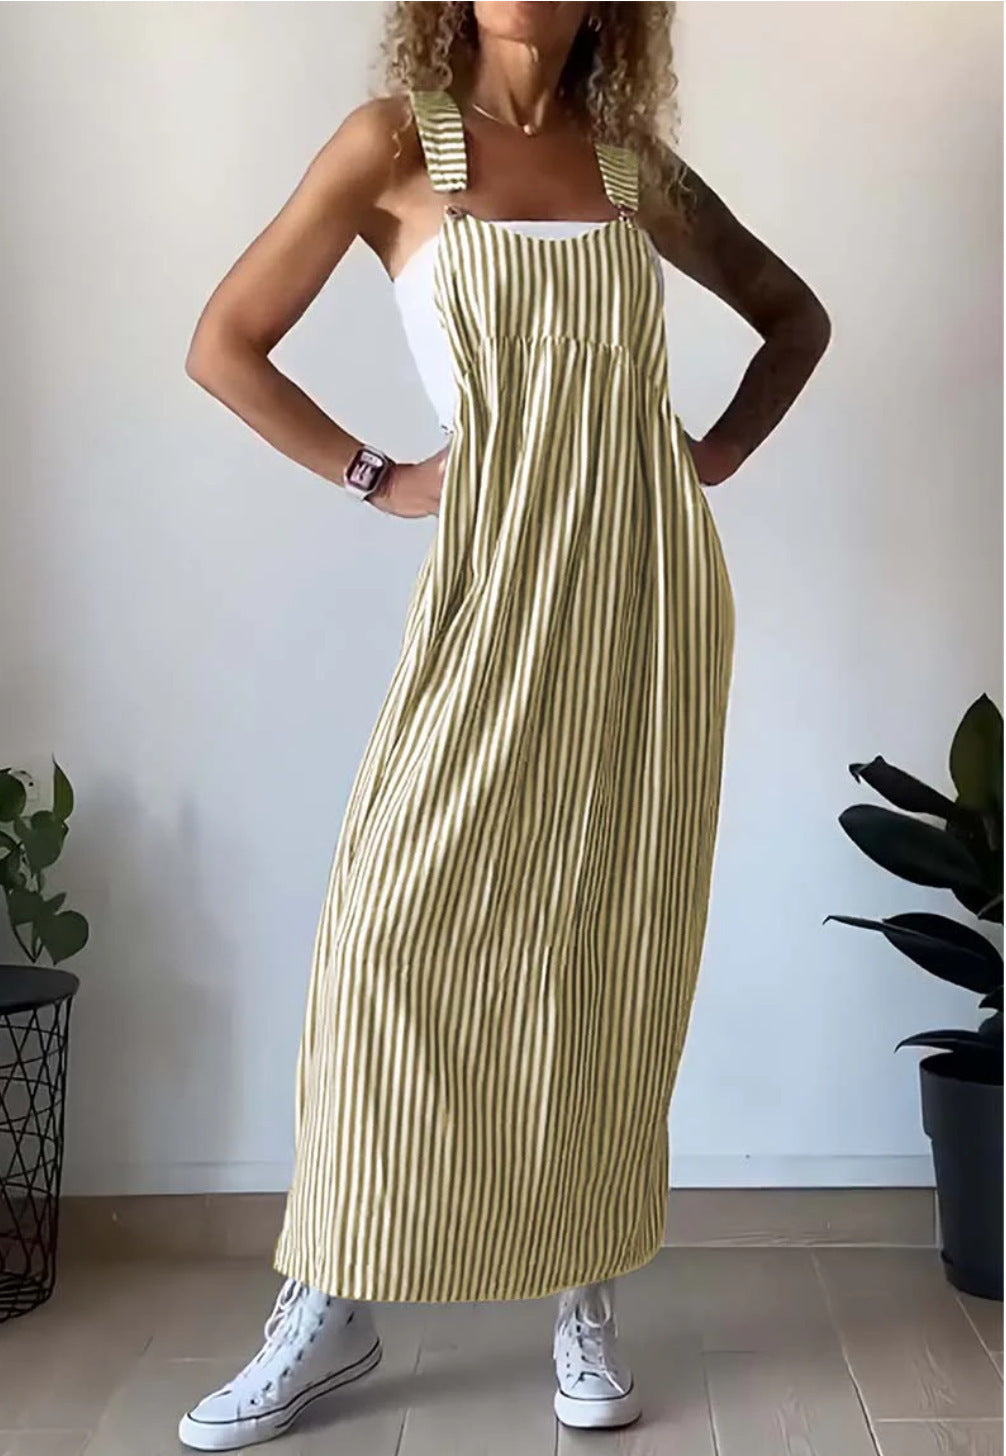 Women's Summer Fashion Striped Overall Dress